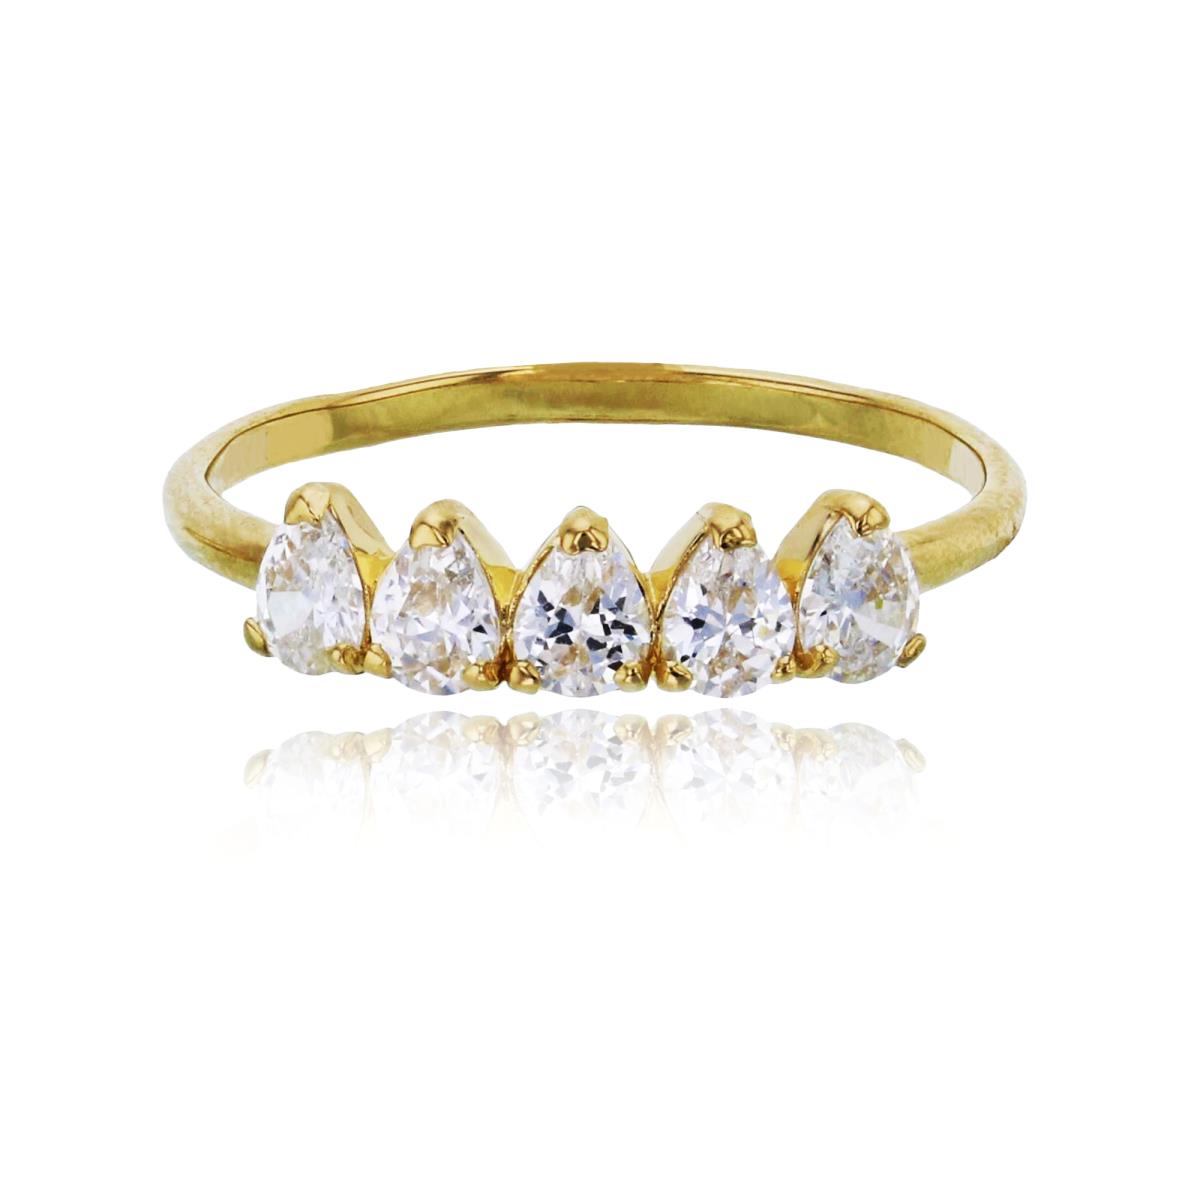 14K Yellow Gold 5-Stone 4x3mm Pear Cut Fashion Ring